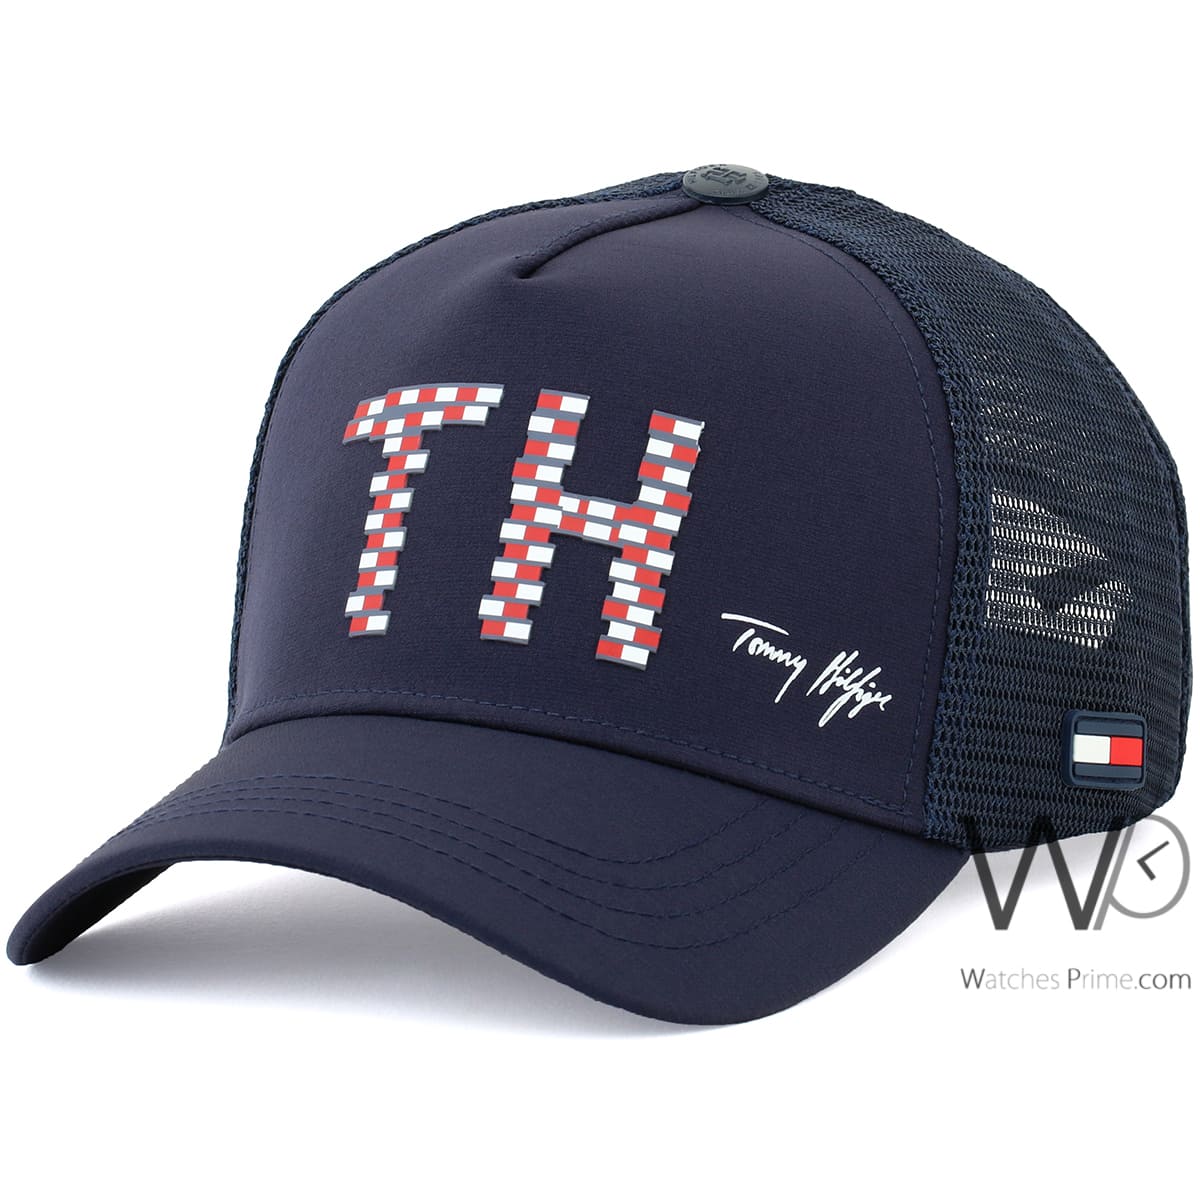 Tommy Hilfiger cap men navy | Watches Prime